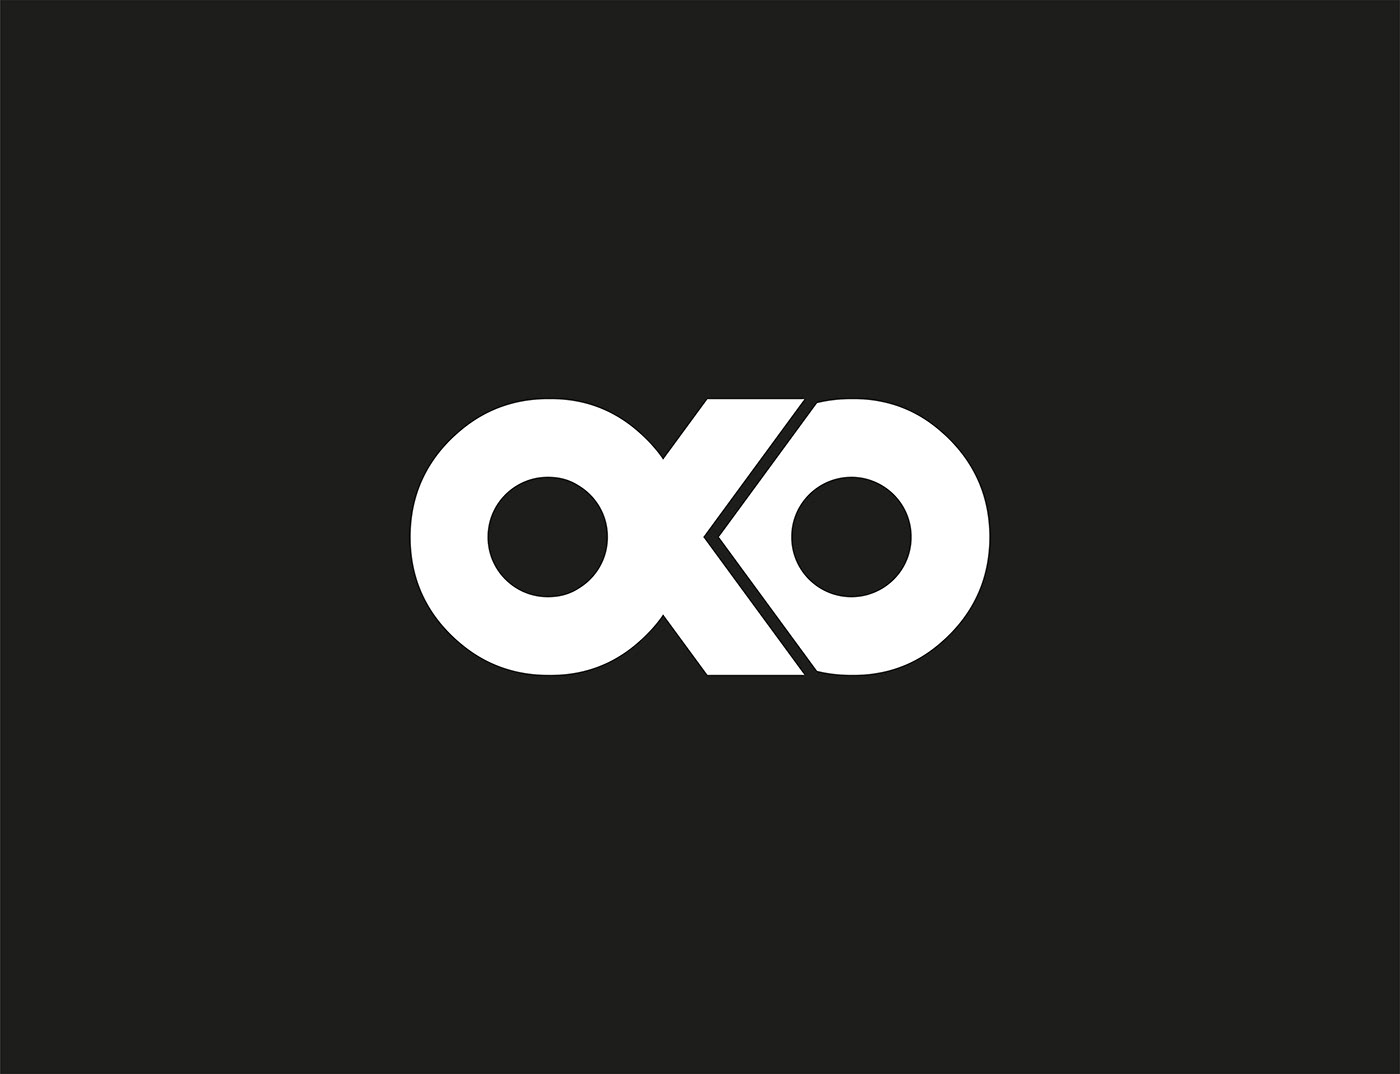 OKO Corporate brand identity design, logo design